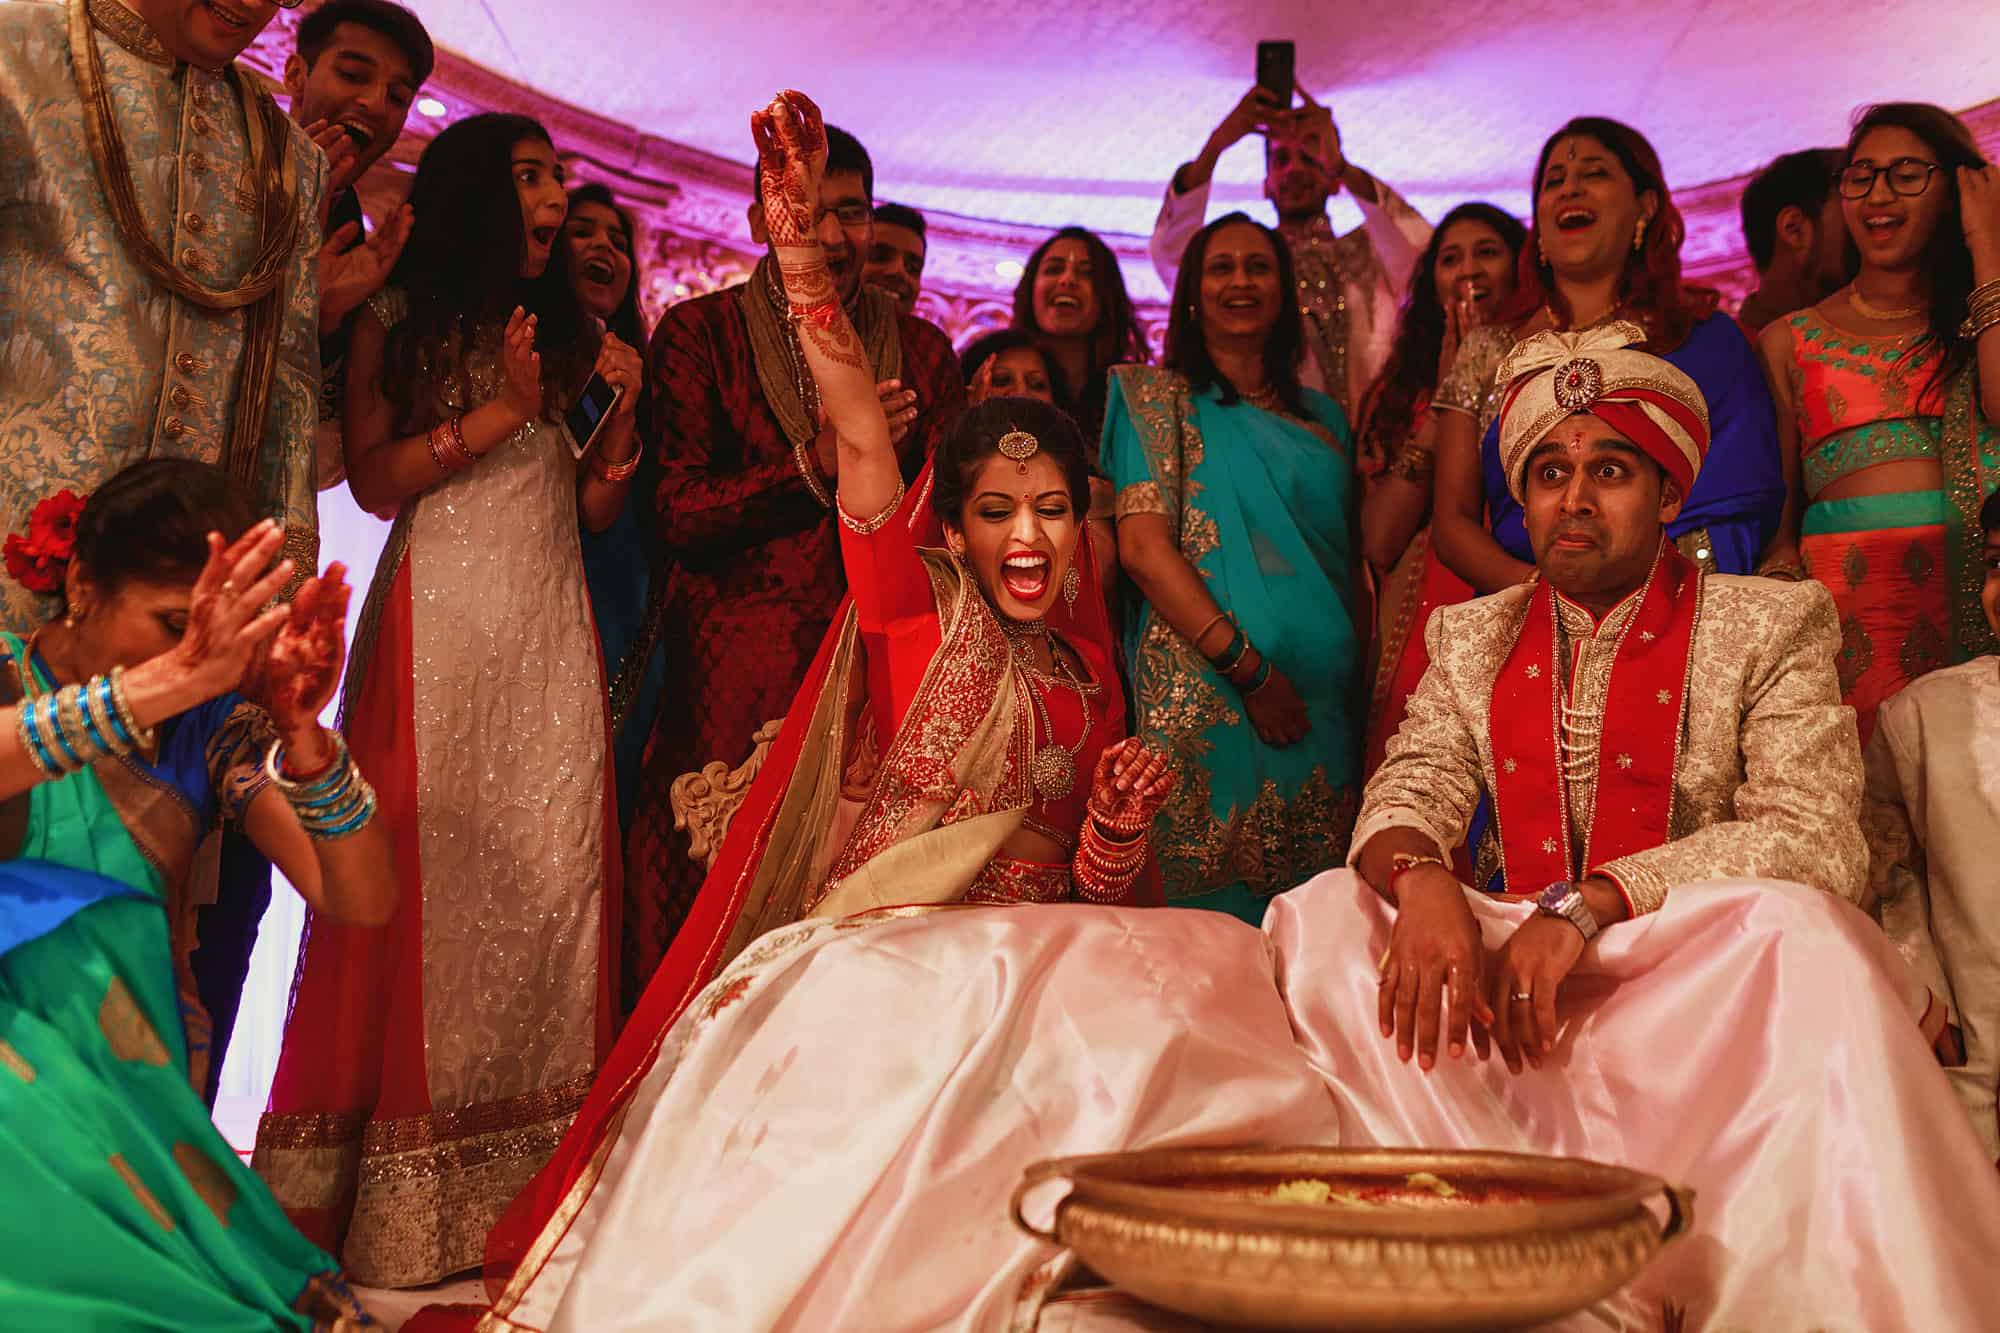 oatlands park hindu wedding reception